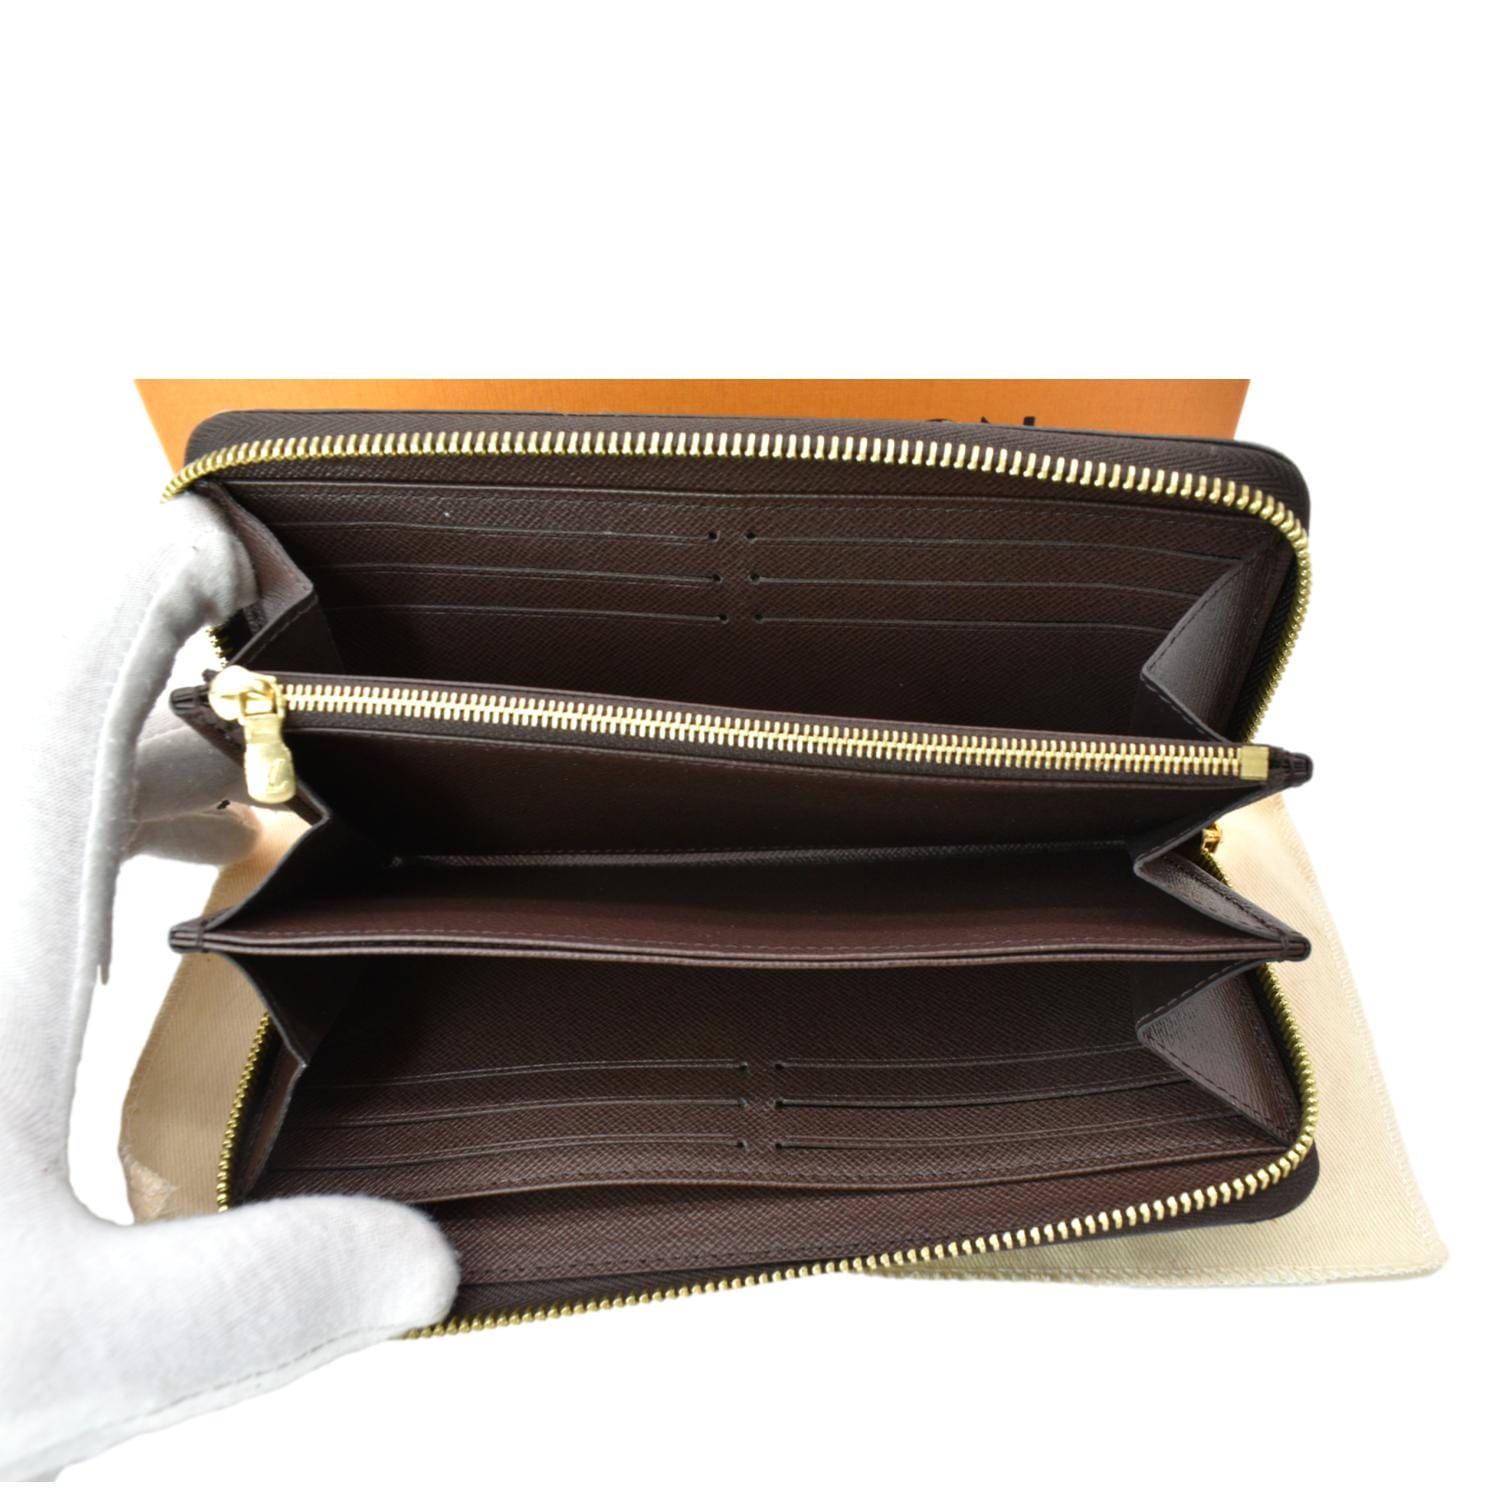 Louis Vuitton brown/tan Damier zip wallet. Beautiful interior with